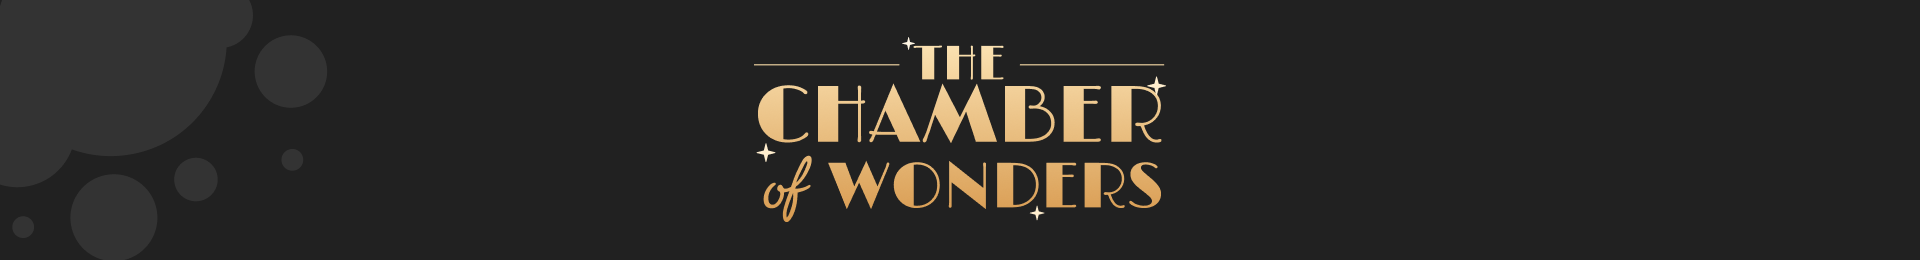 Chamber of Wonders banner